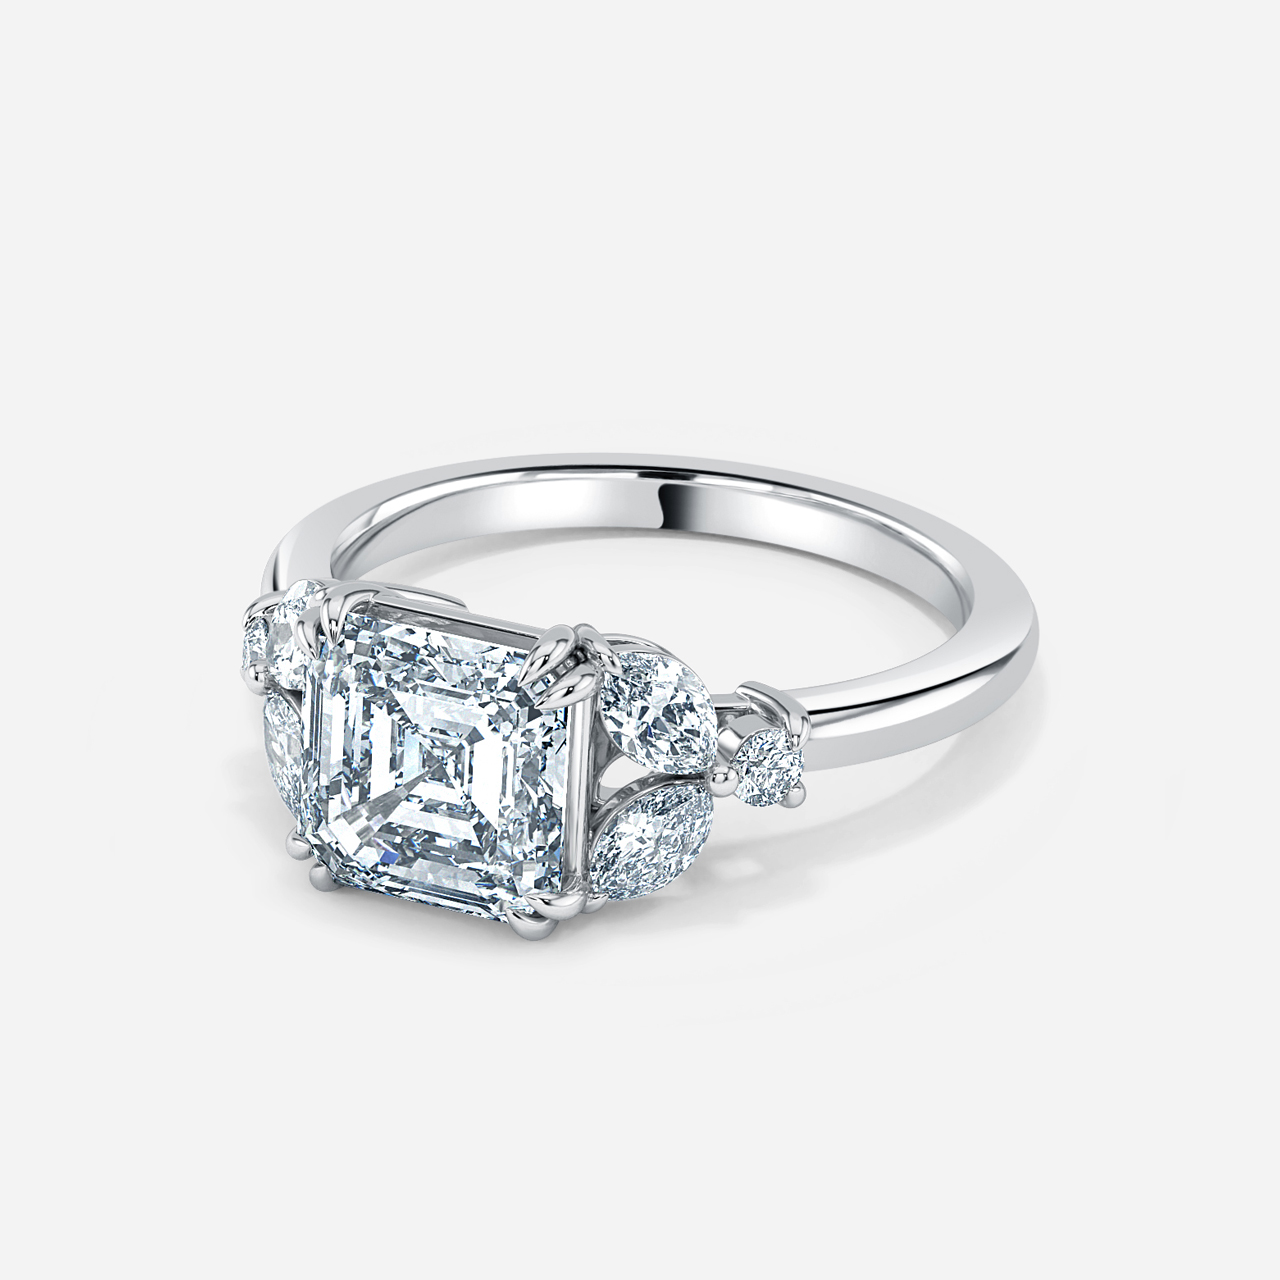 Victoria White Gold Unique Engagement Ring